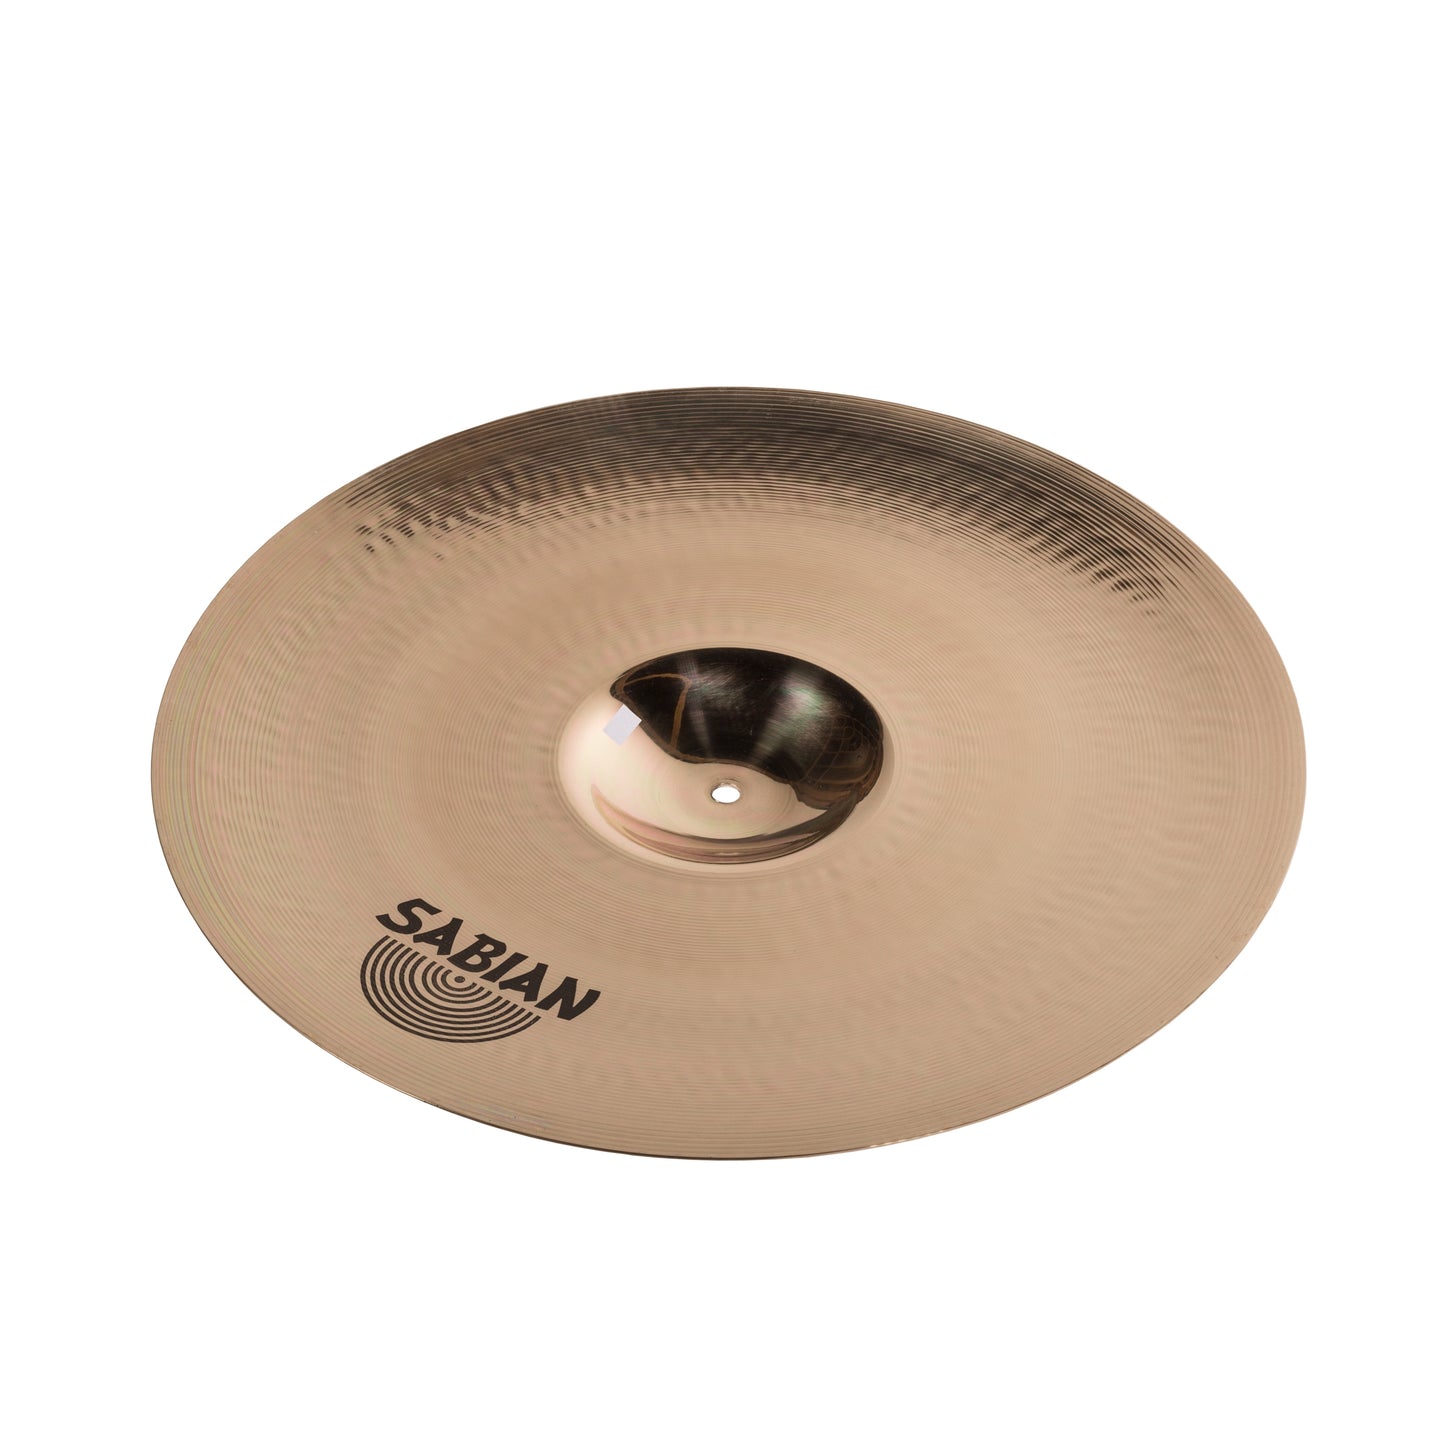 Sabian 20” XSR Rock Ride Cymbal